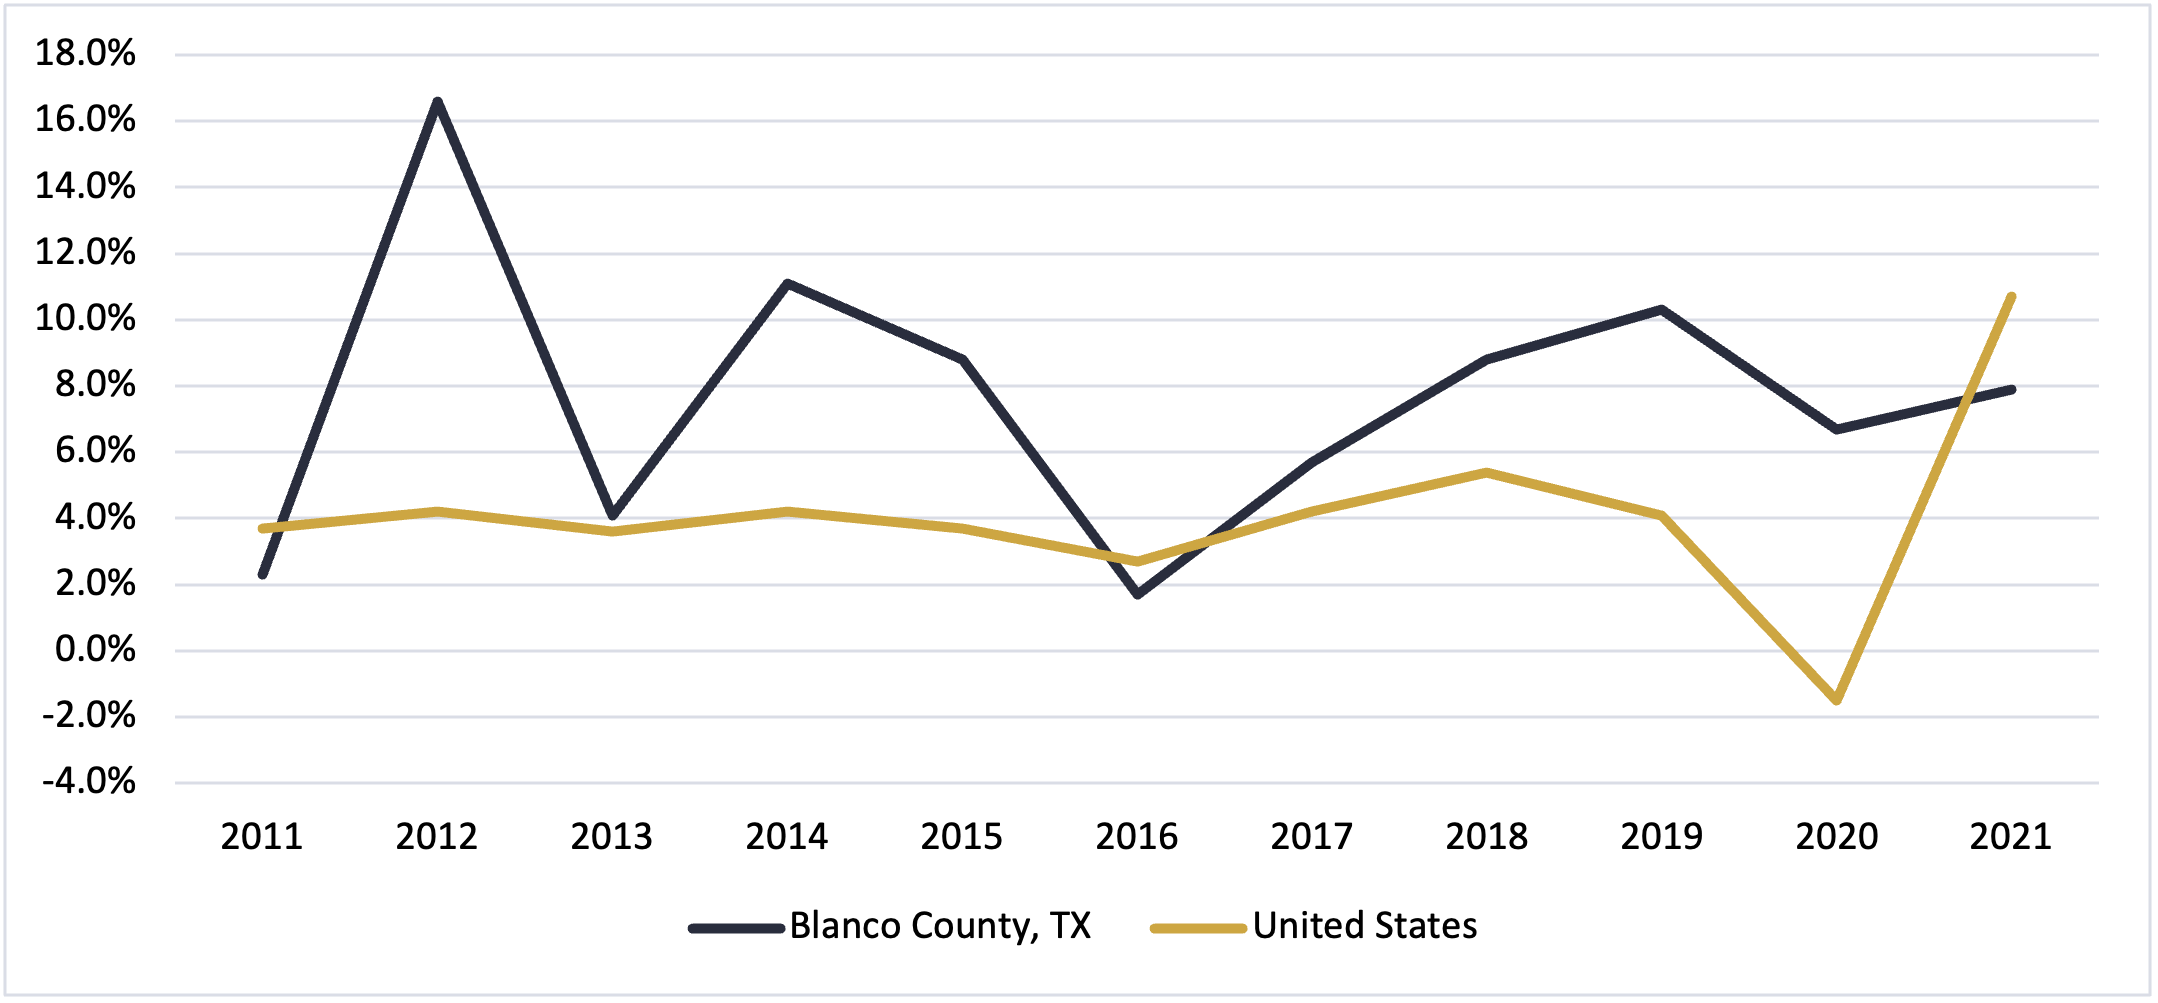 Blanco County, Texas Gross Regional Product Growth 2021